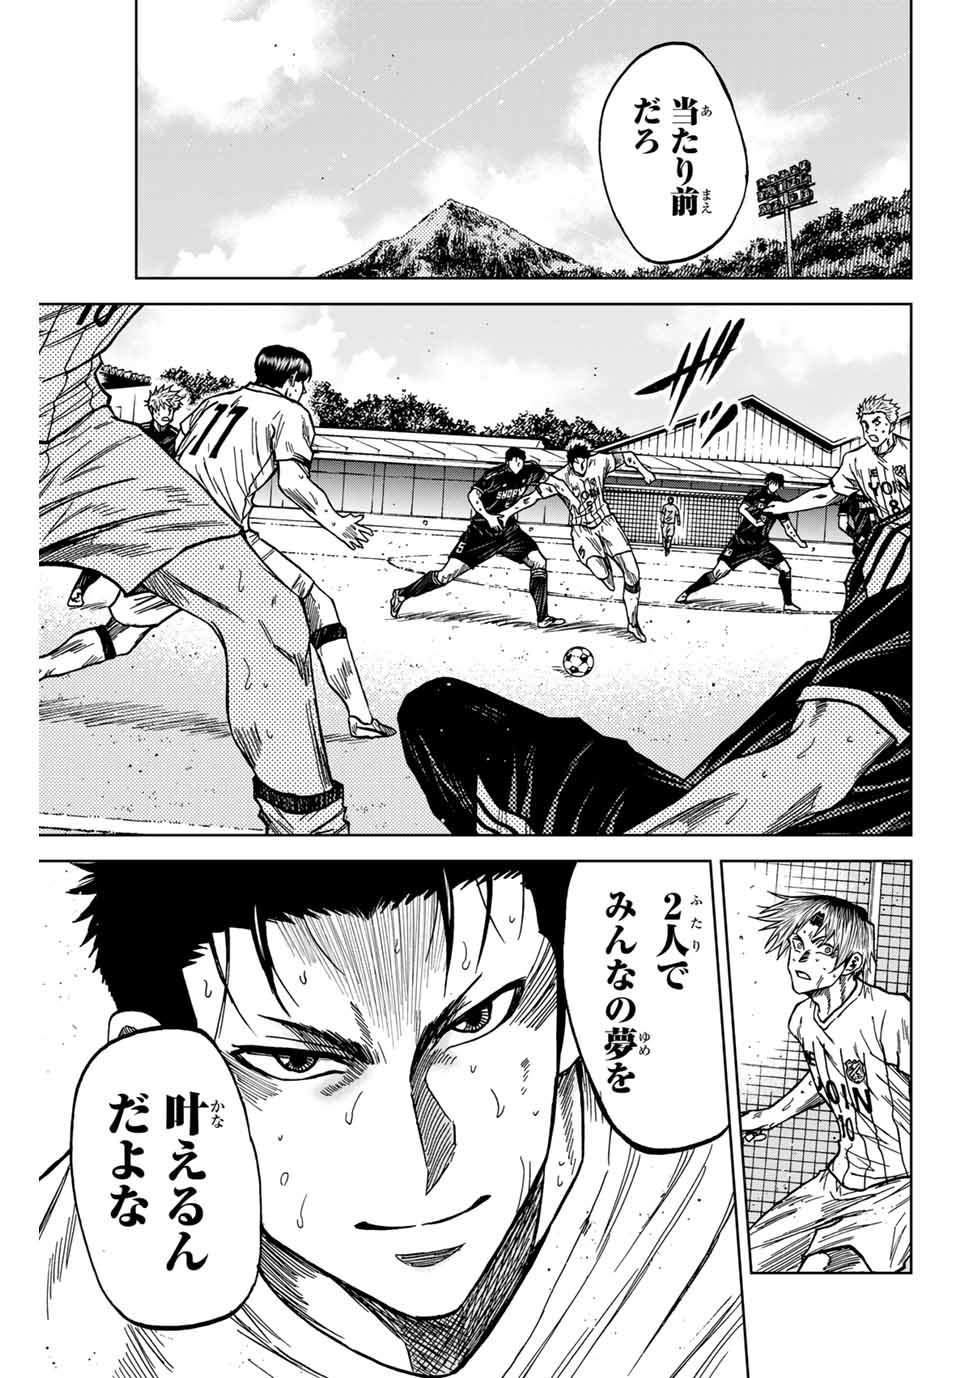 Aoku Somero - Chapter 110 - Page 5